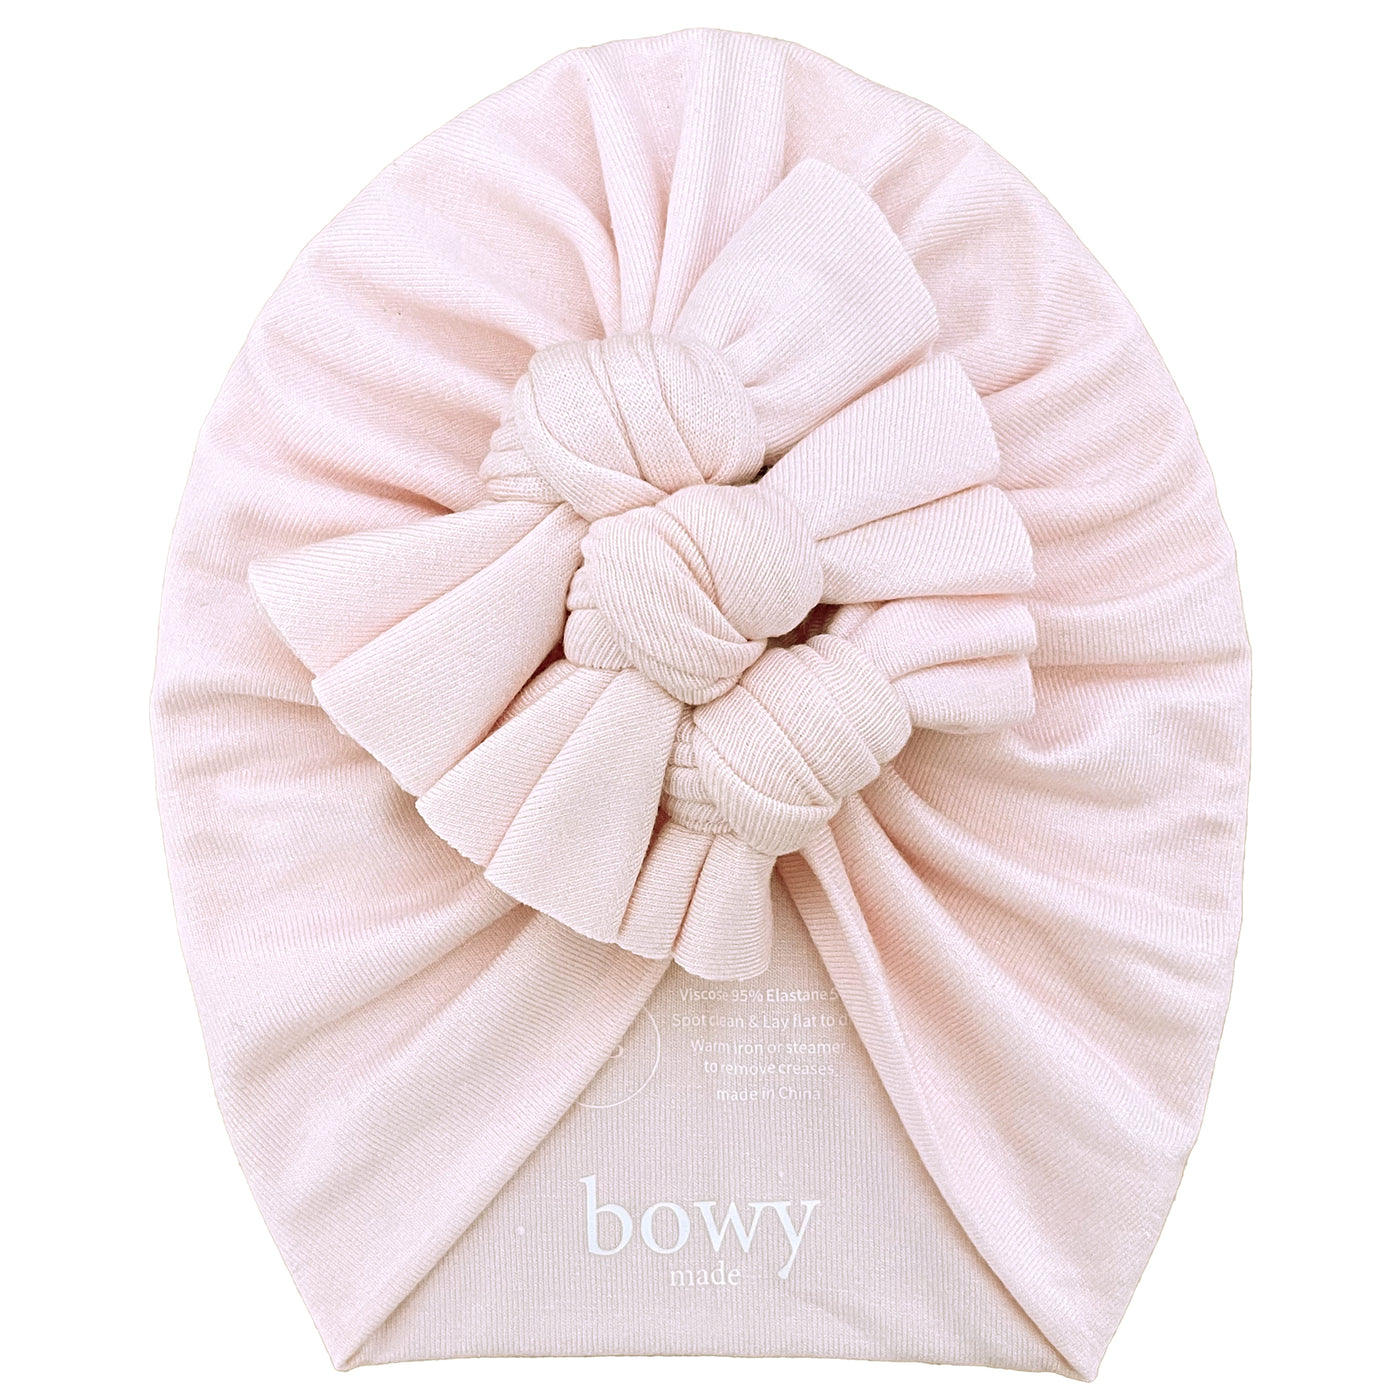 Bowy Baby Turban - Floss